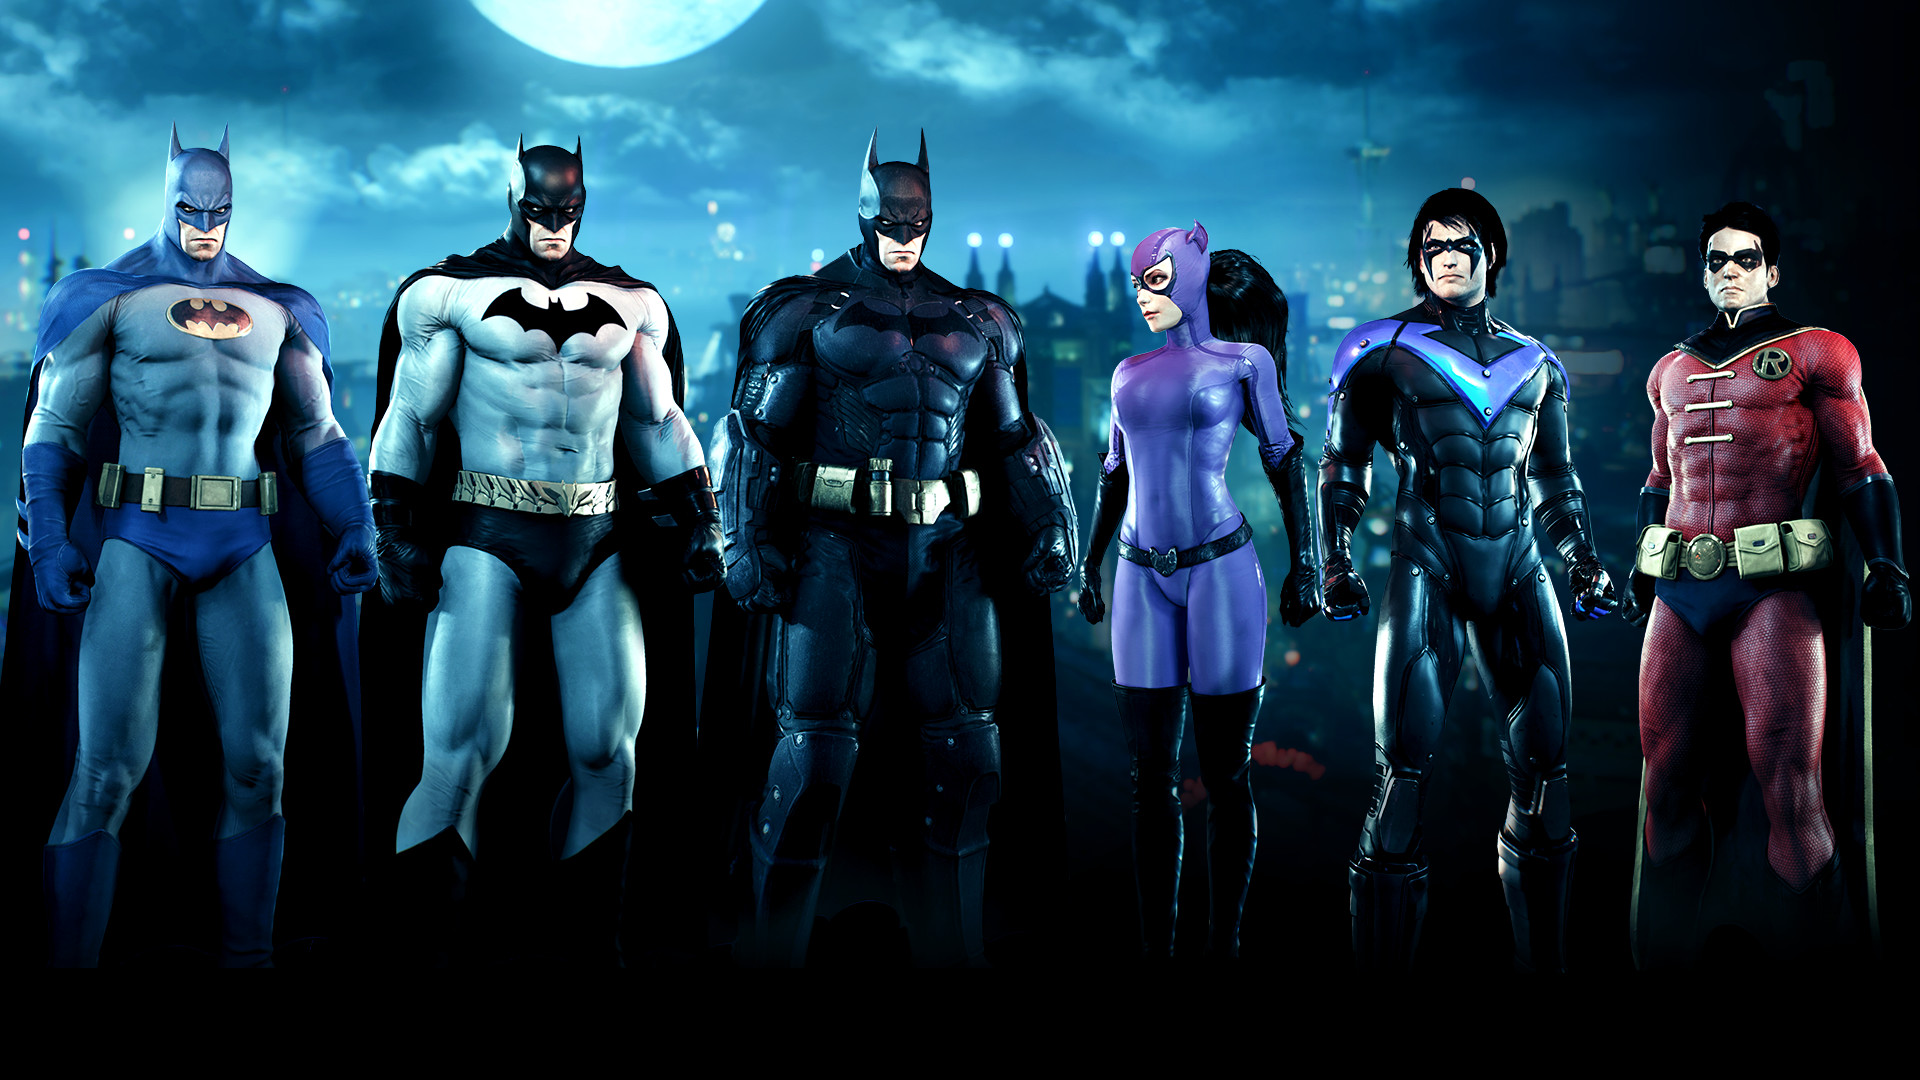 Steam Batman Arkham Knight Bat Family Skin Pack